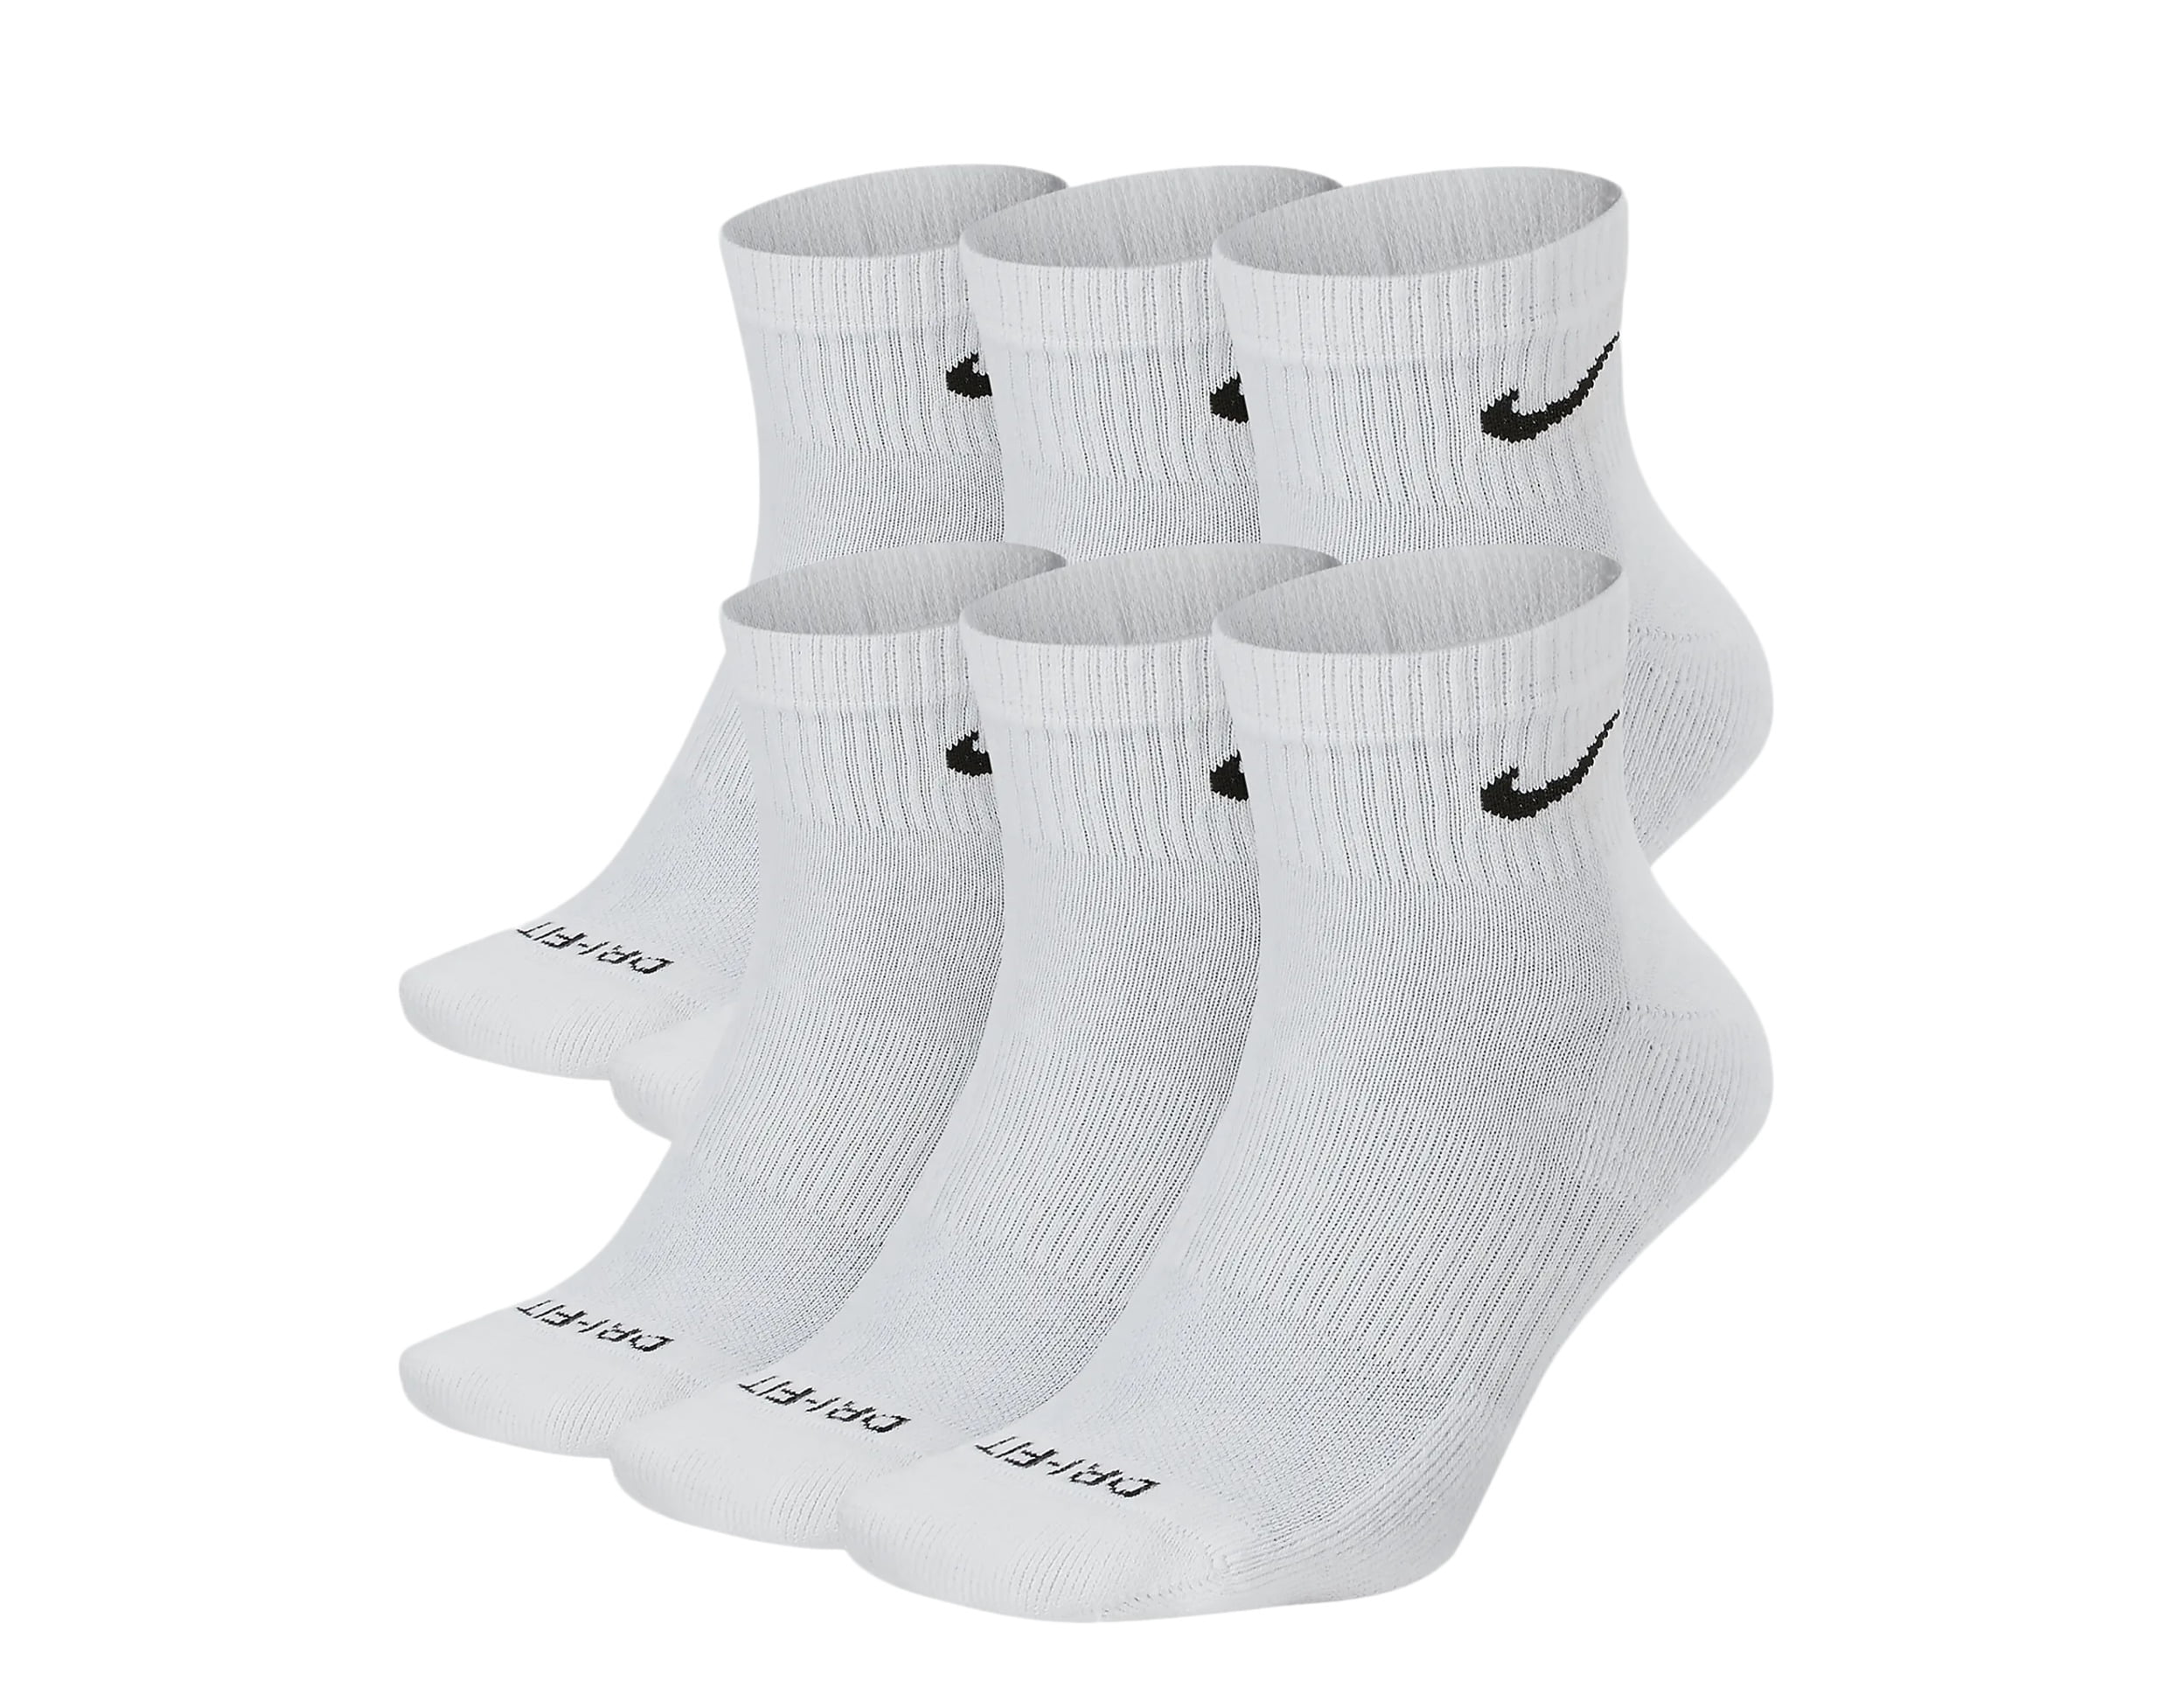 Nike Everyday Plus Ankle White/Black Socks 6 Pair Pack SX6899-100 Large (Men's 8-12)